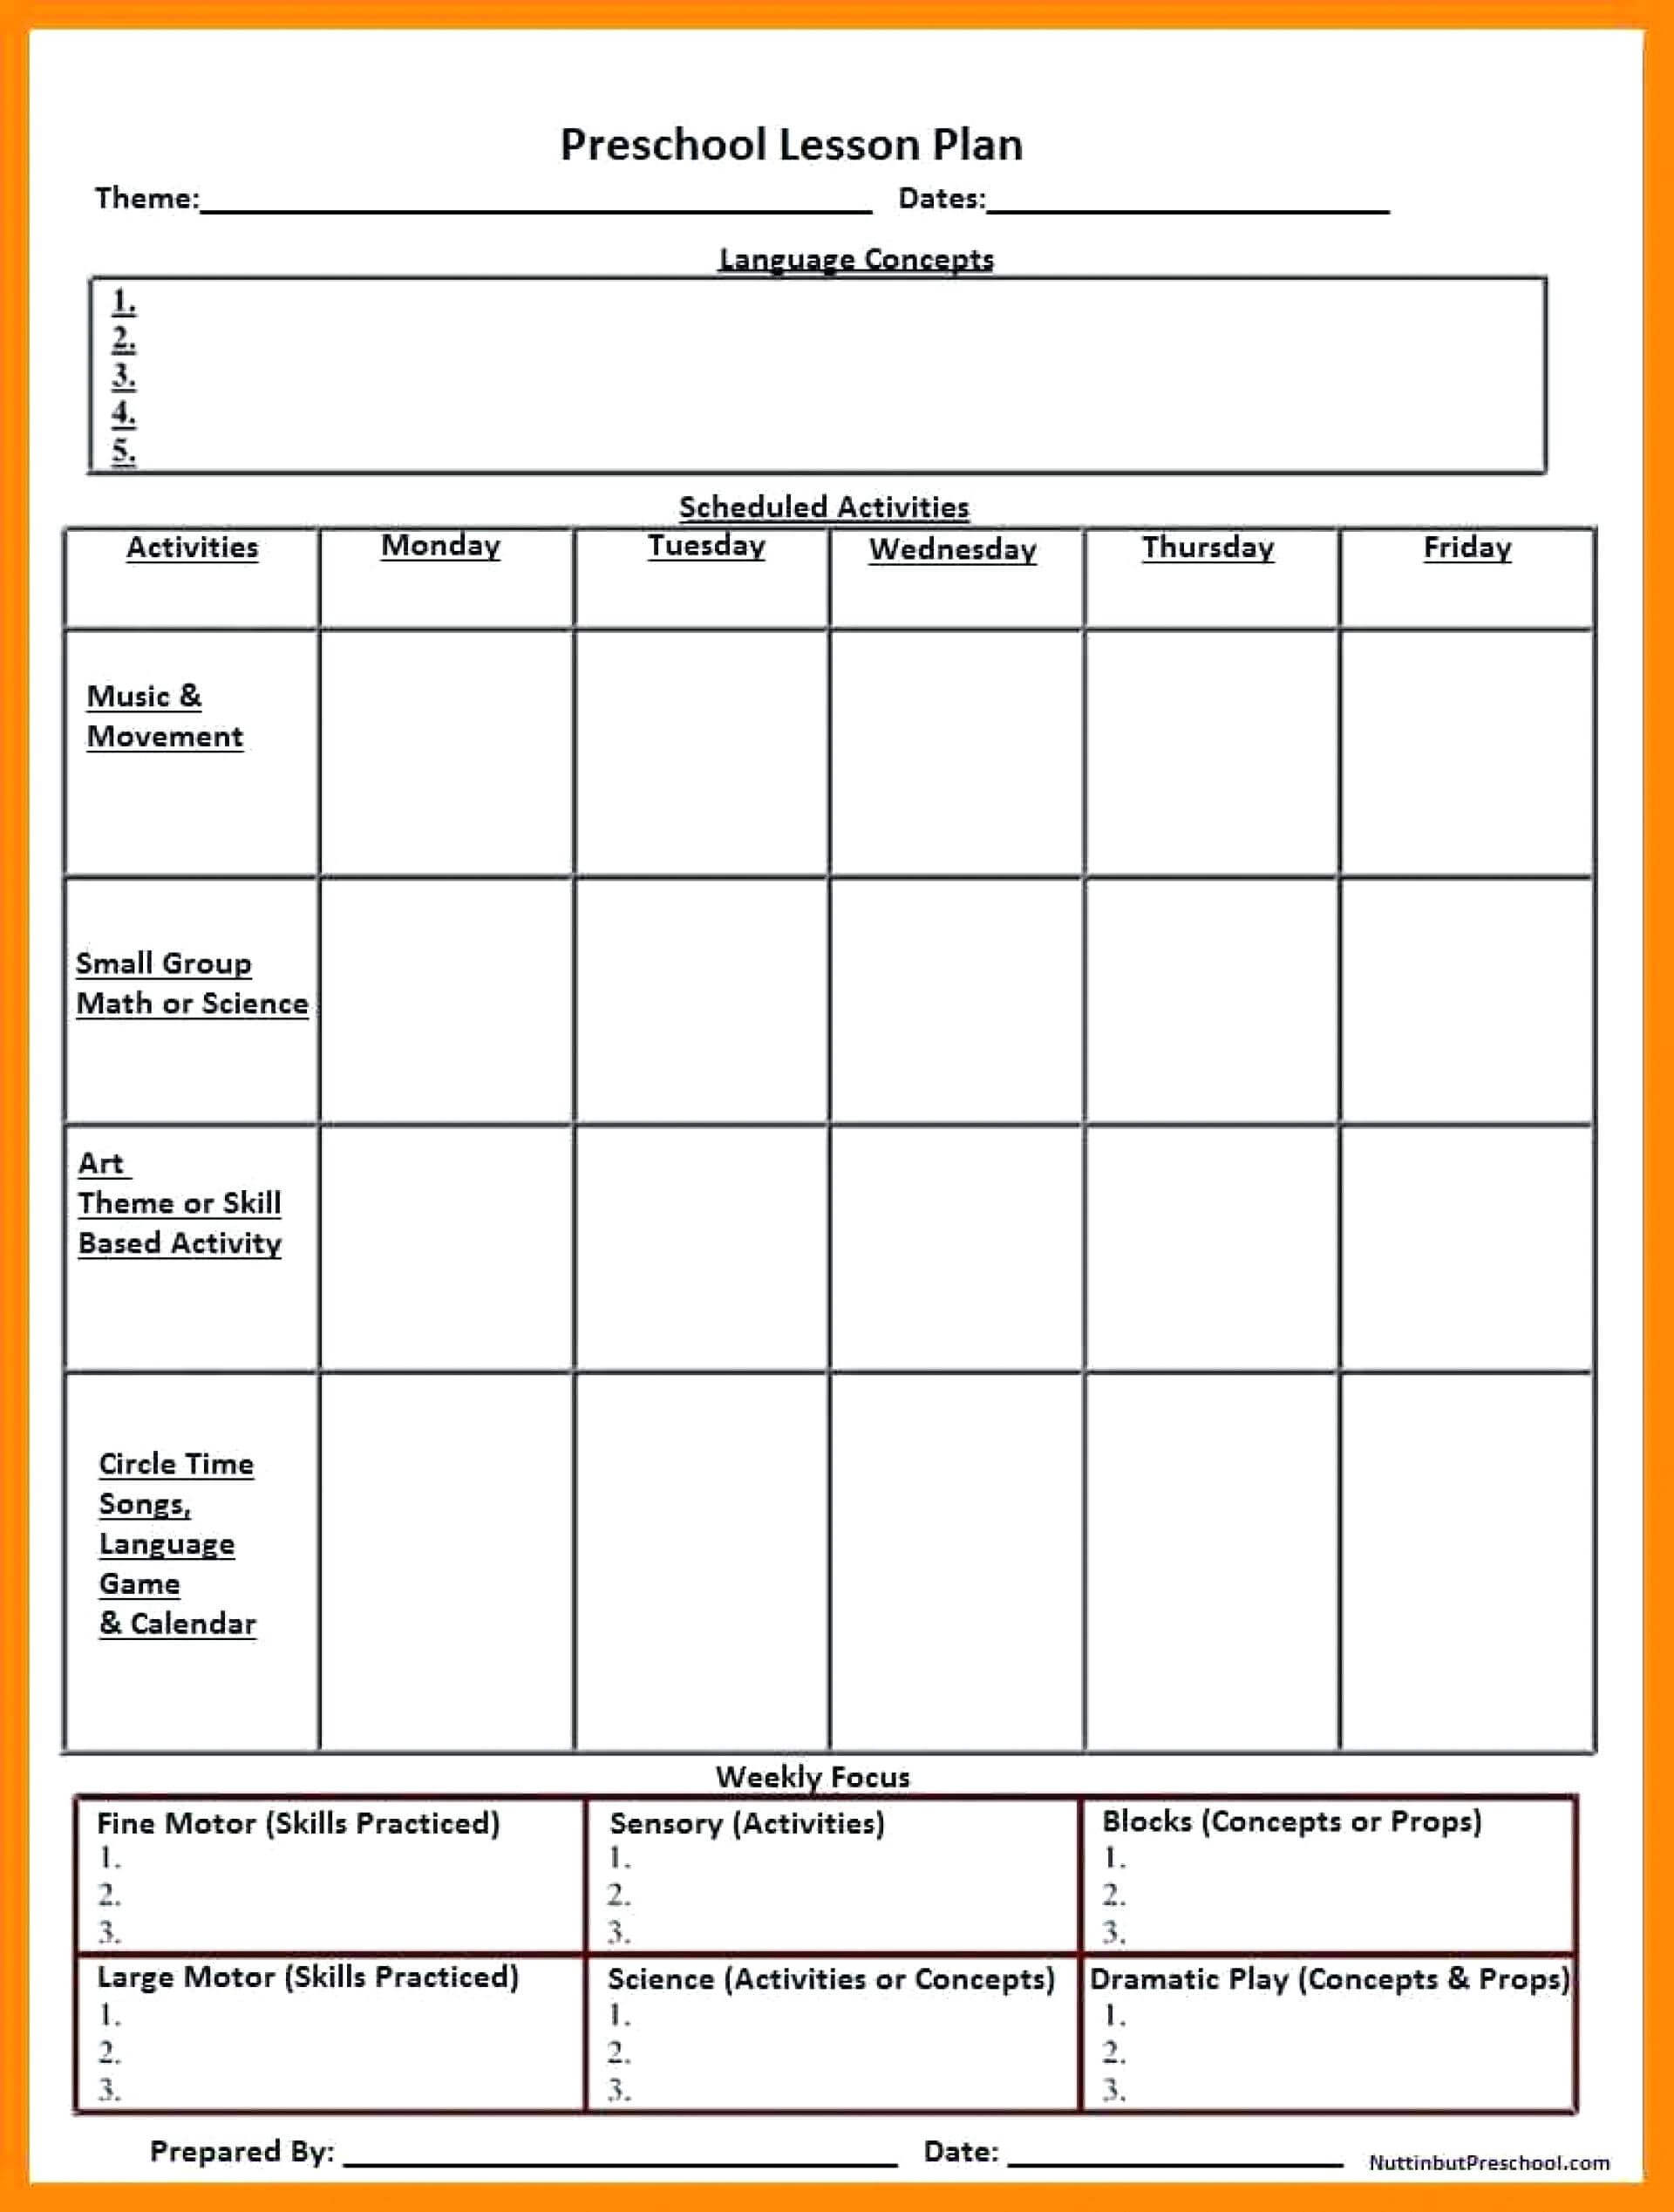 022 Preschool Lesson Plan Templates Template Ideas Plans For With Blank Preschool Lesson Plan Template